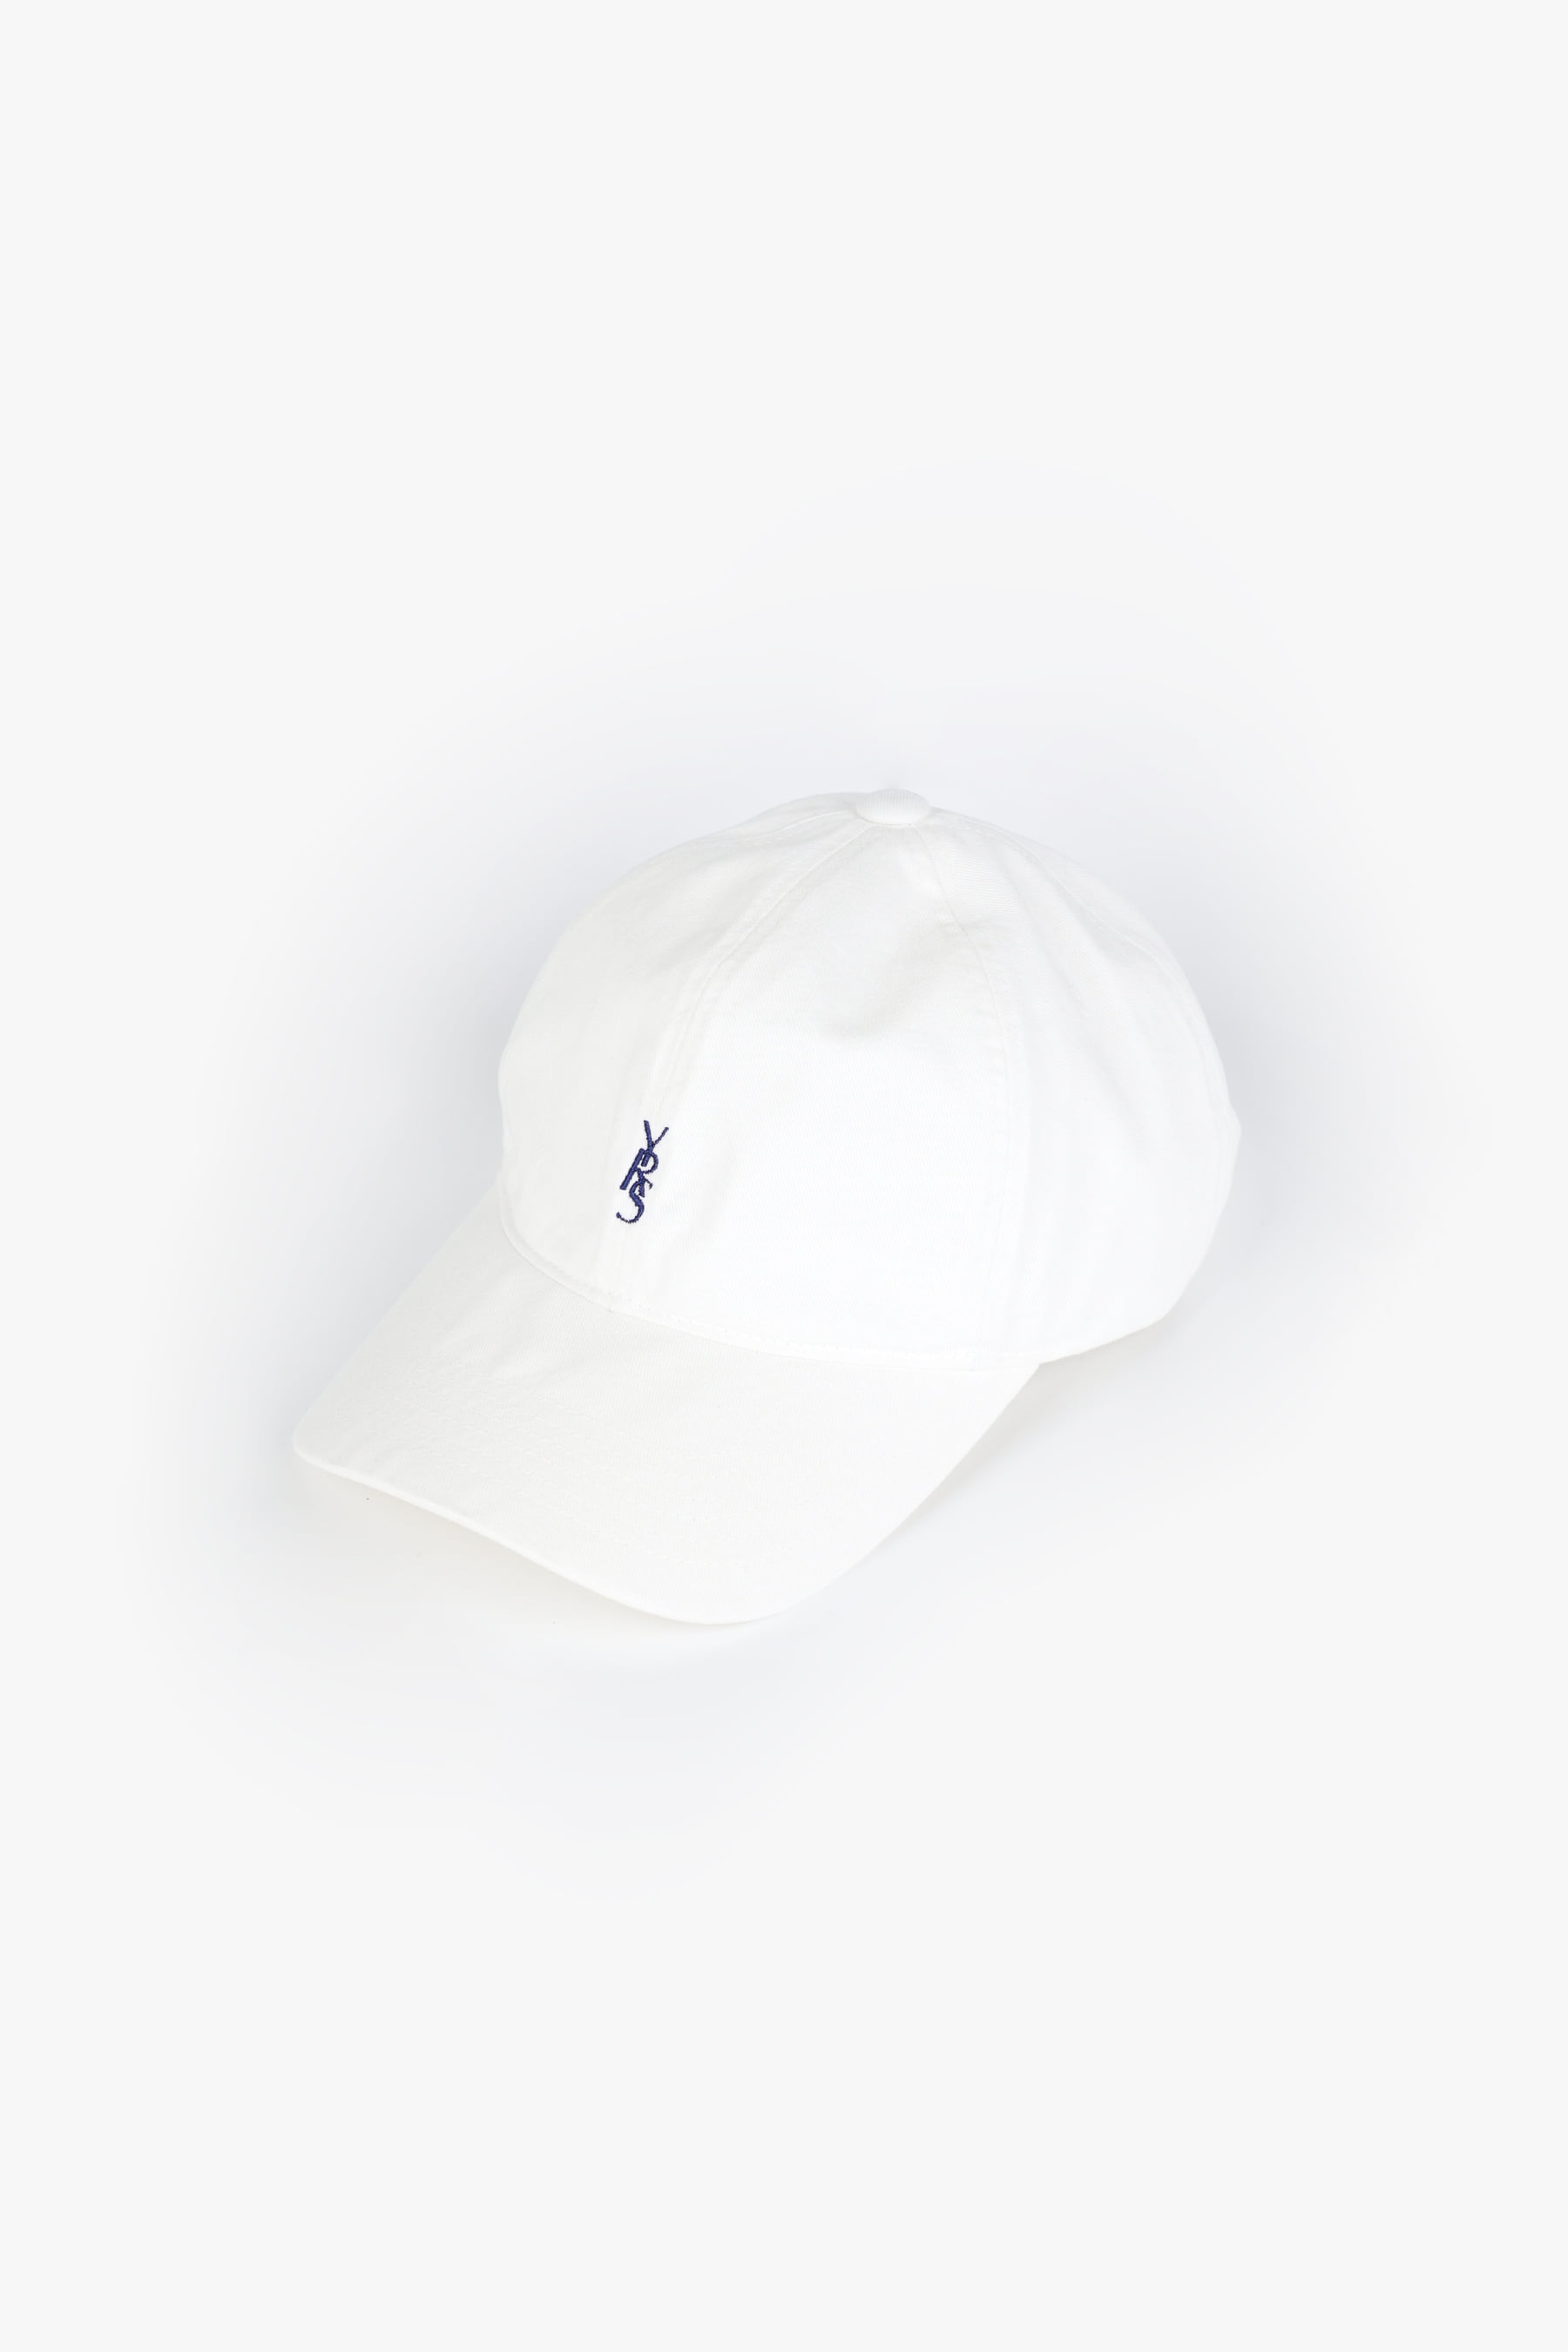 OFF WHITE 80-90’S VNTG CAP (VINTAGE SYMBOL PARODY)